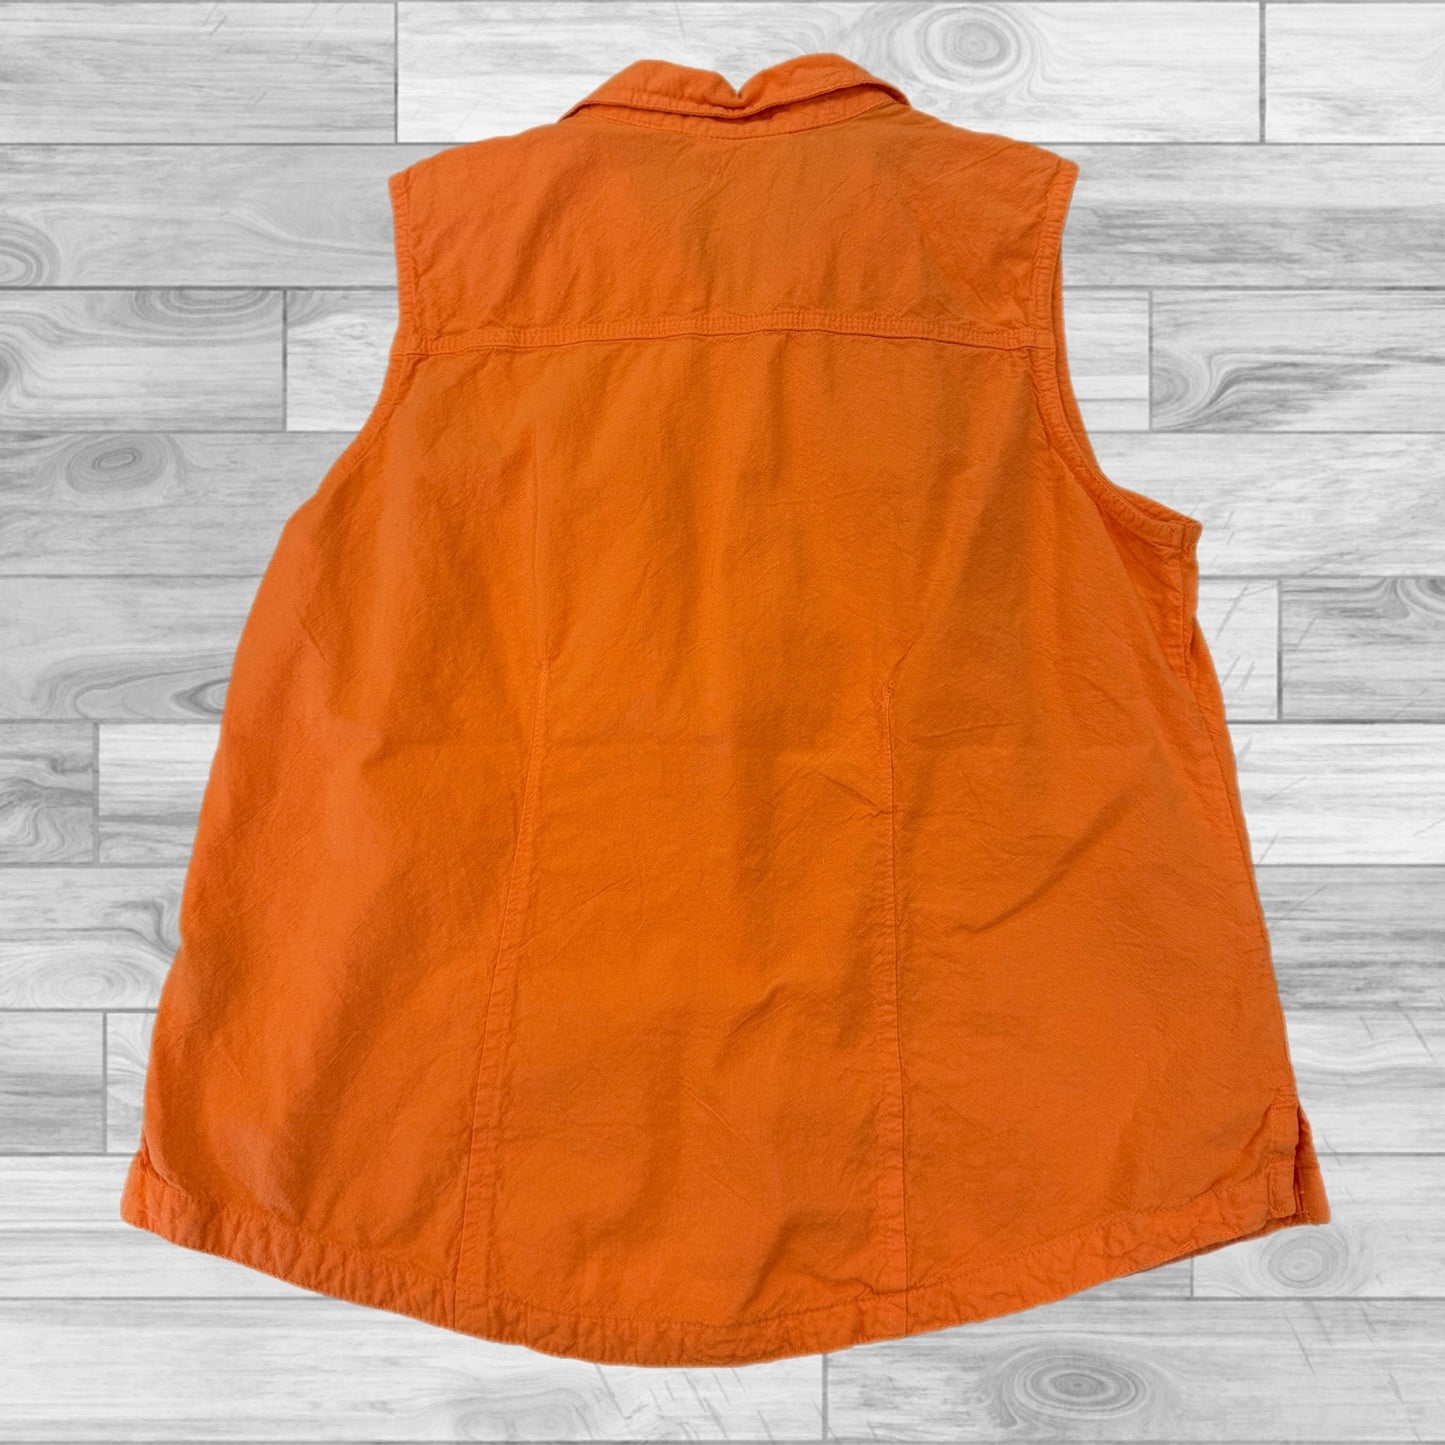 Orange Top Sleeveless Clothes Mentor, Size Petite  M